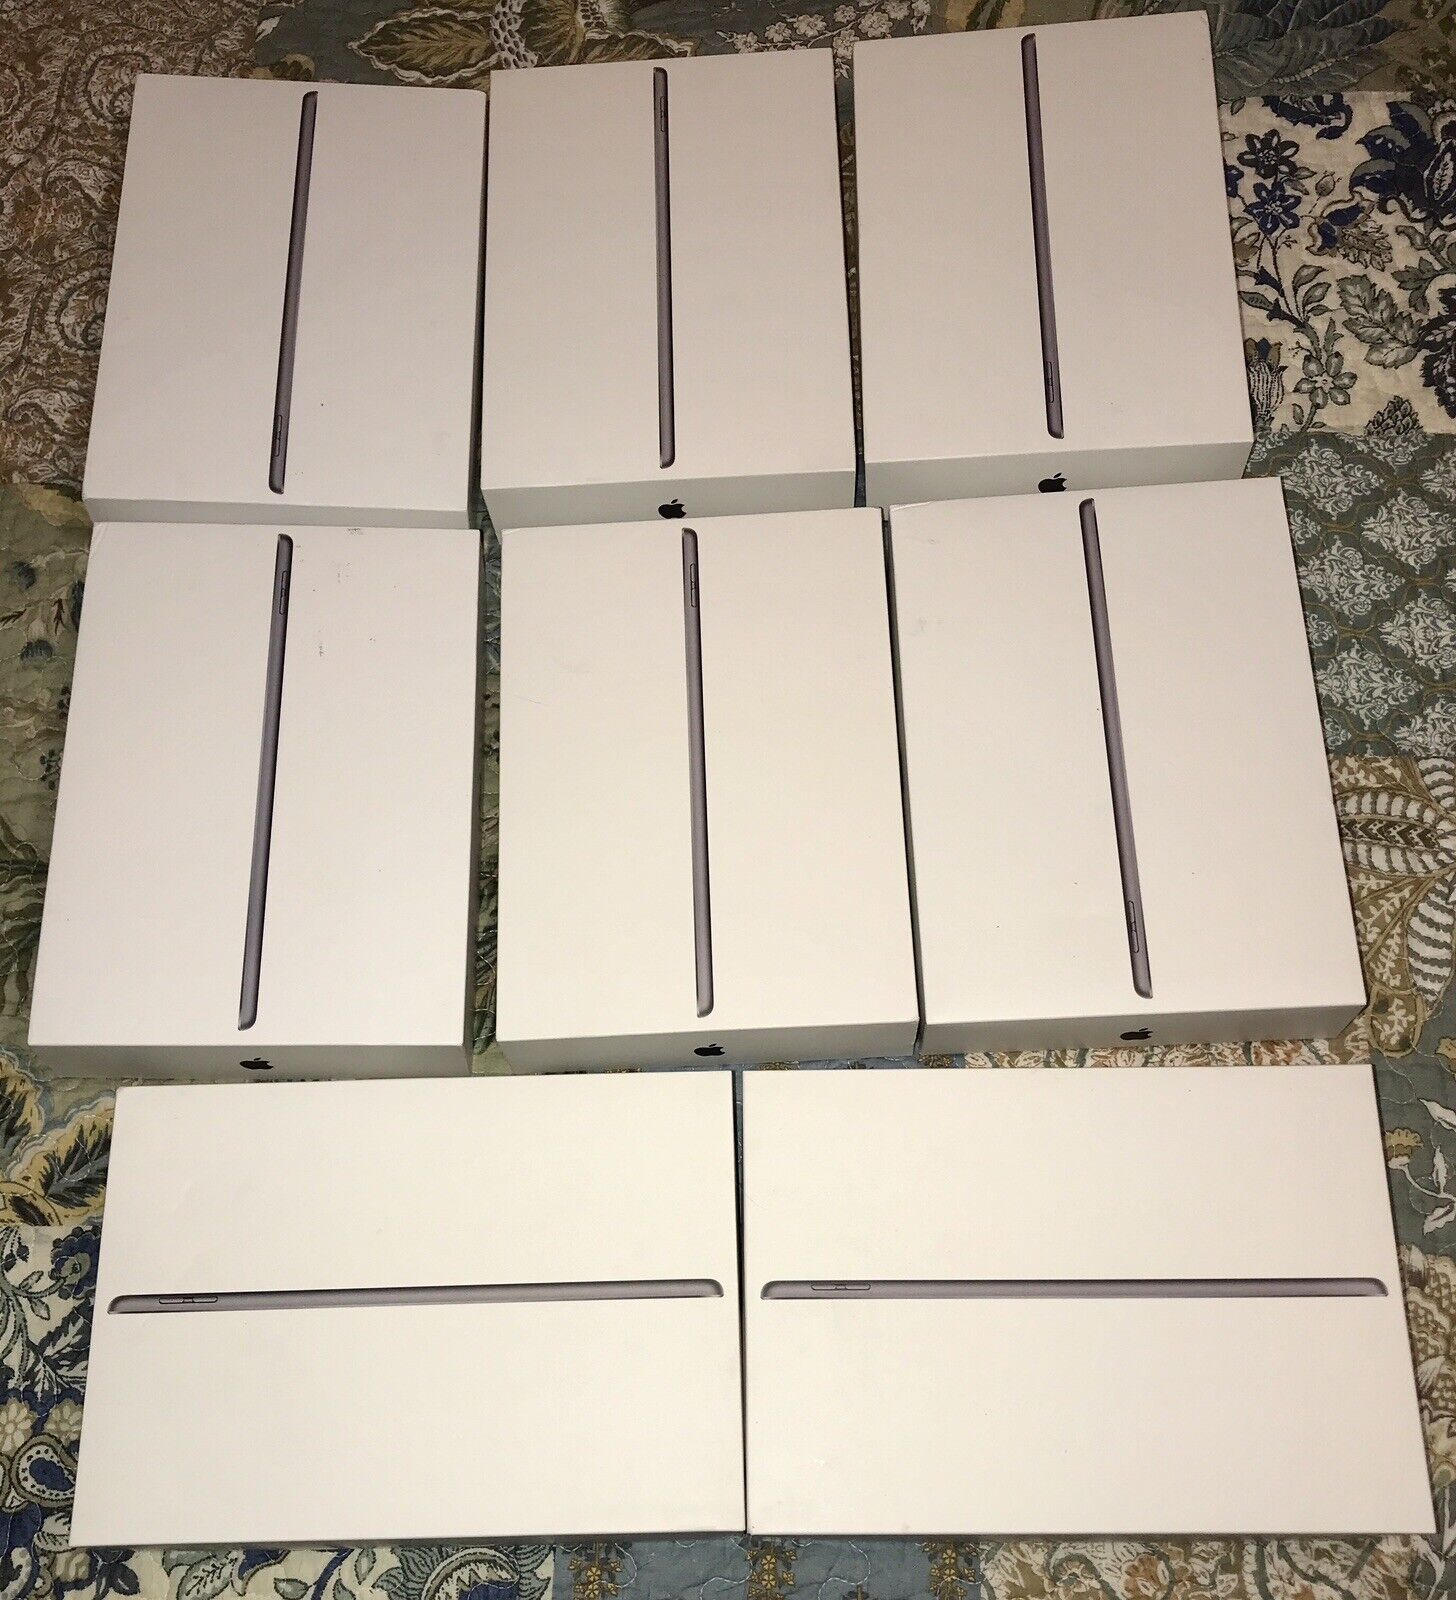 Retail Box - Apple iPad 64GB Gray 9th Generation - EMPTY BOX ONLY - LOT OF 8